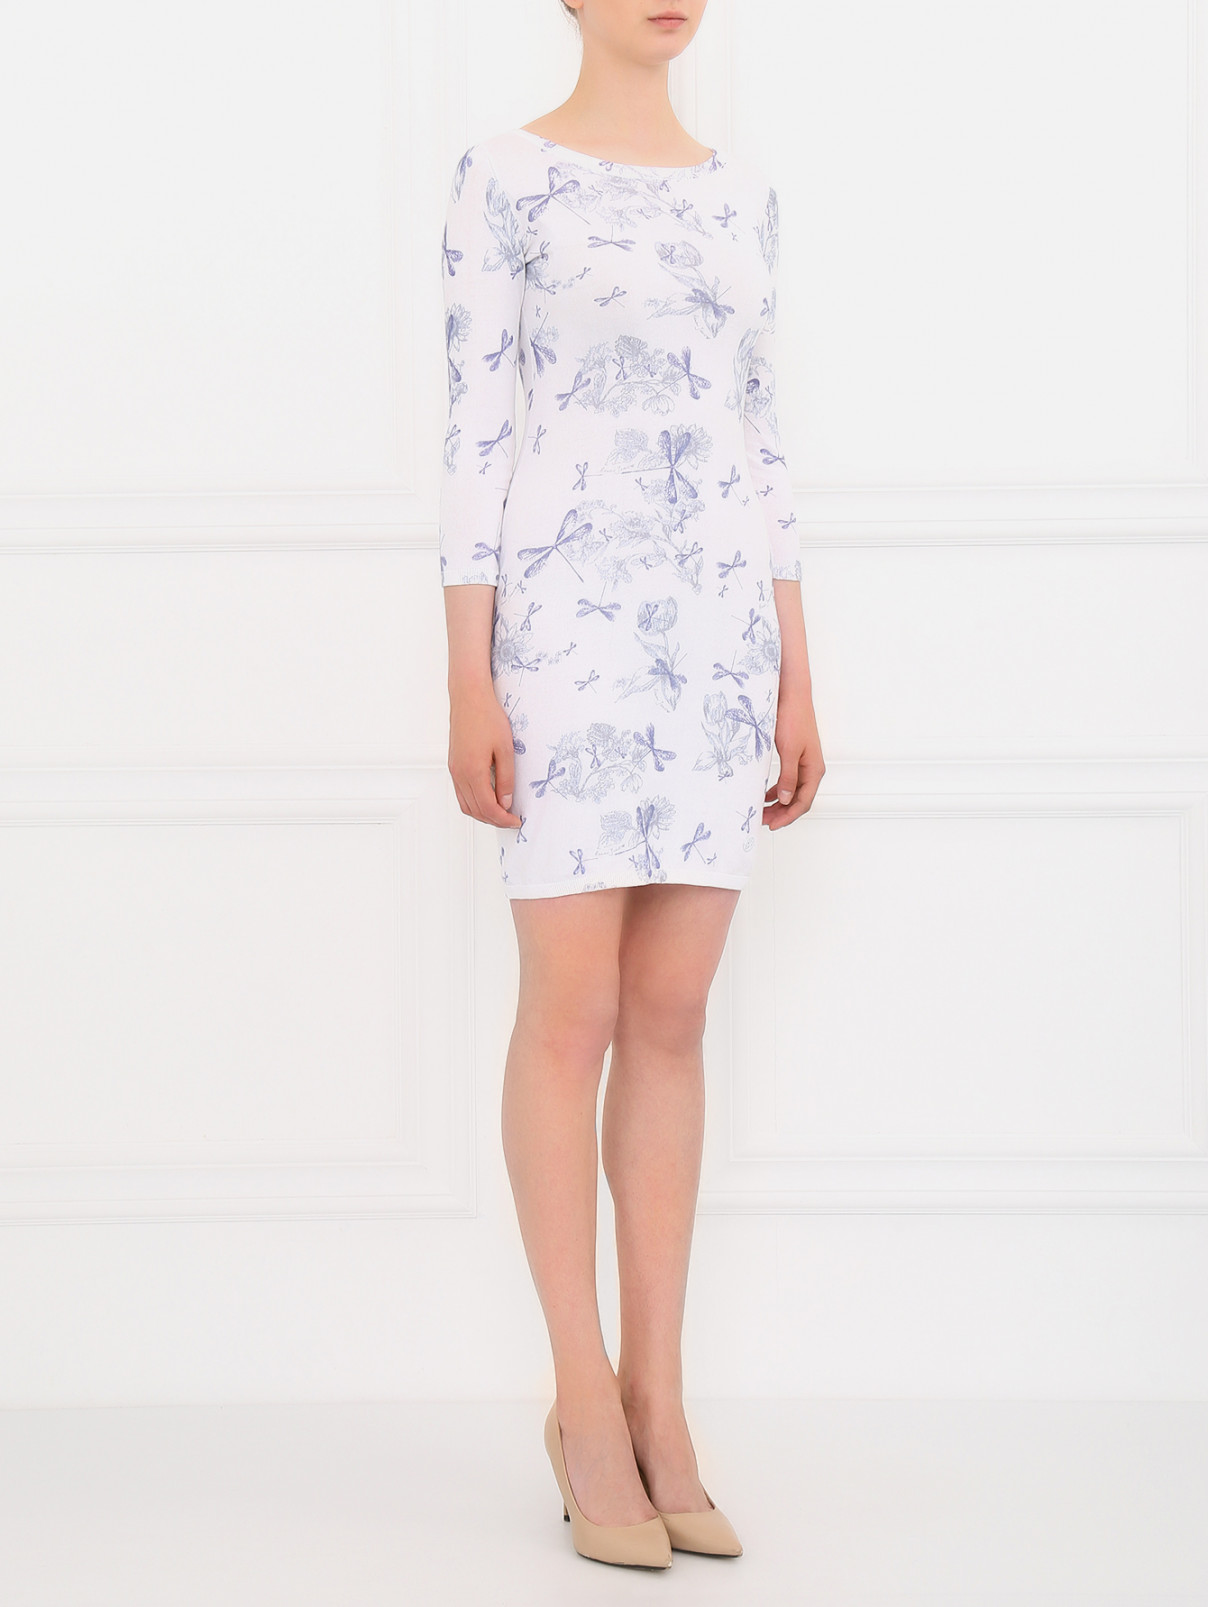 Платье-мини мелкой вязки Armani Jeans  –  Модель Общий вид  – Цвет:  Узор